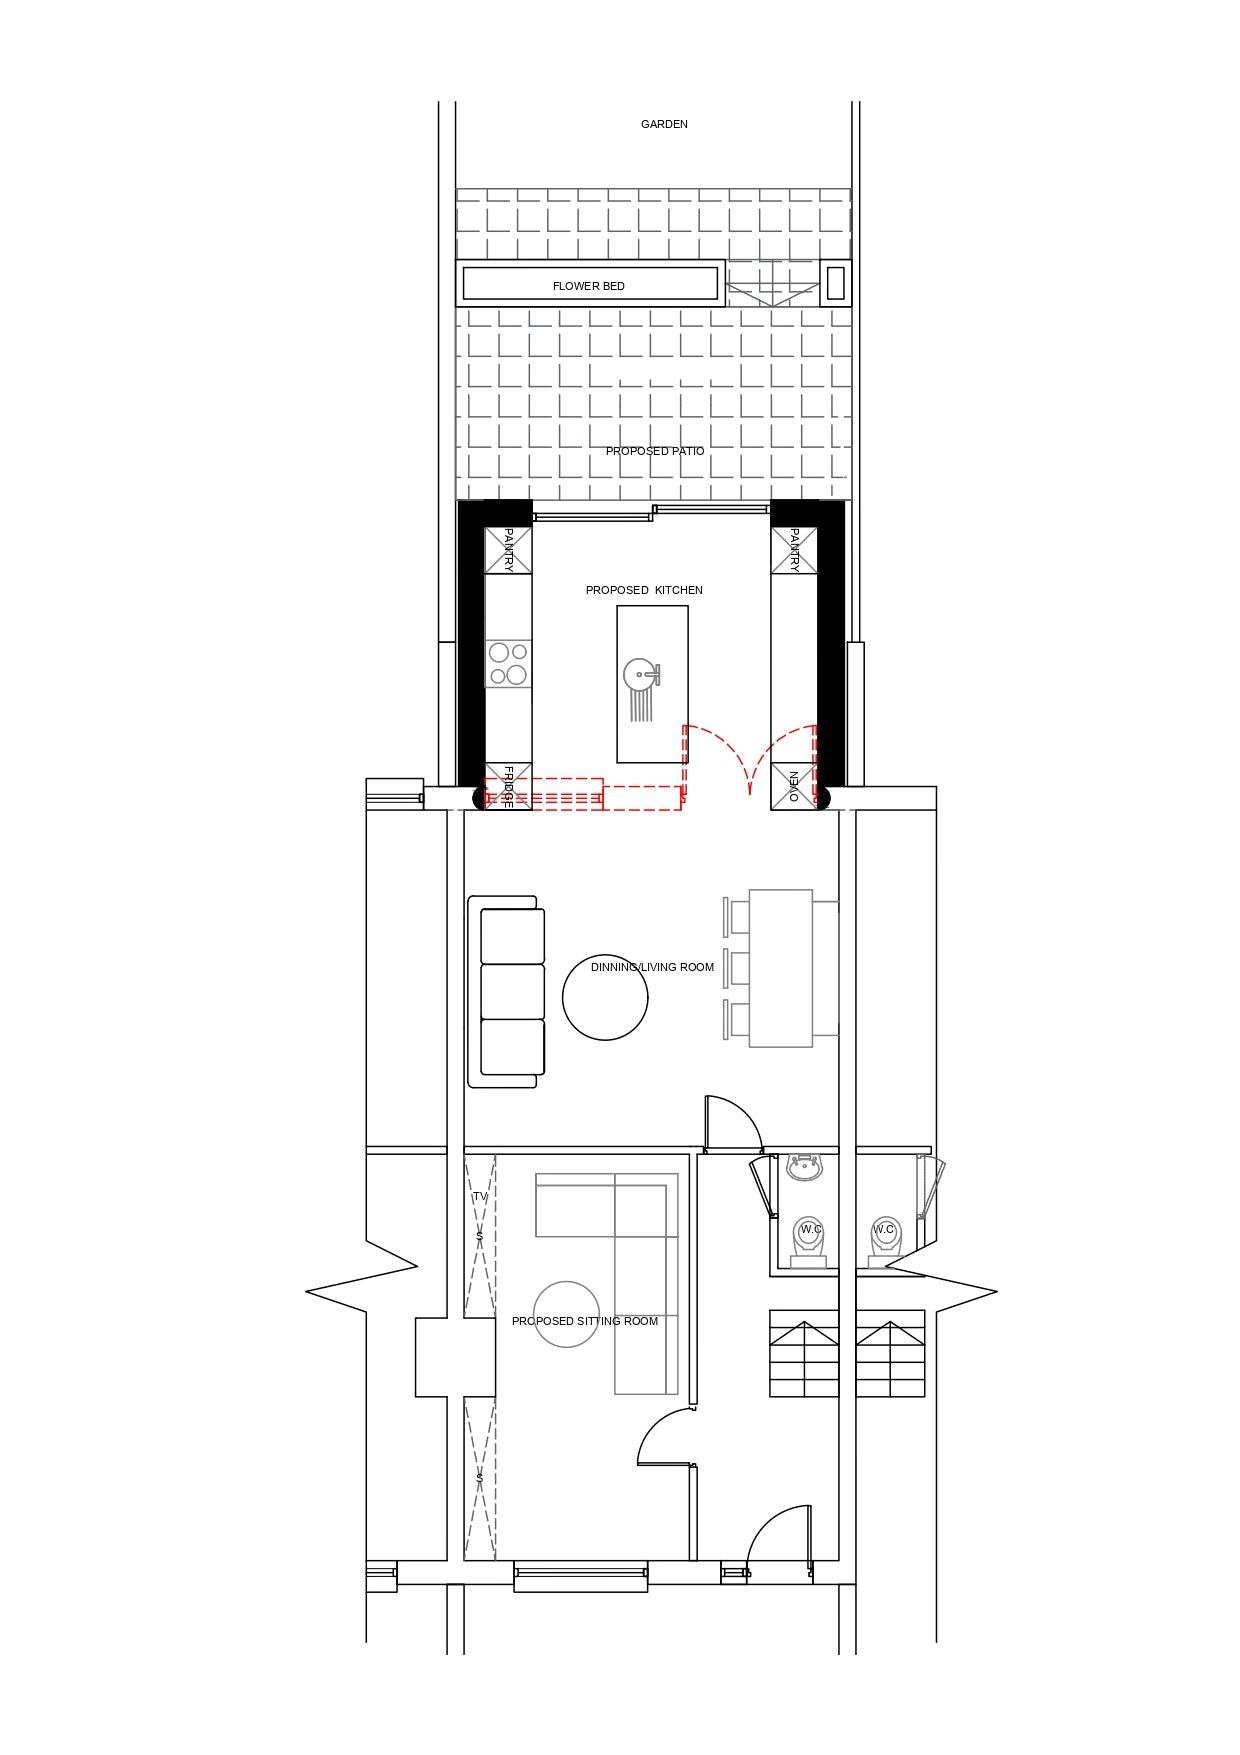 Proposed floorplan